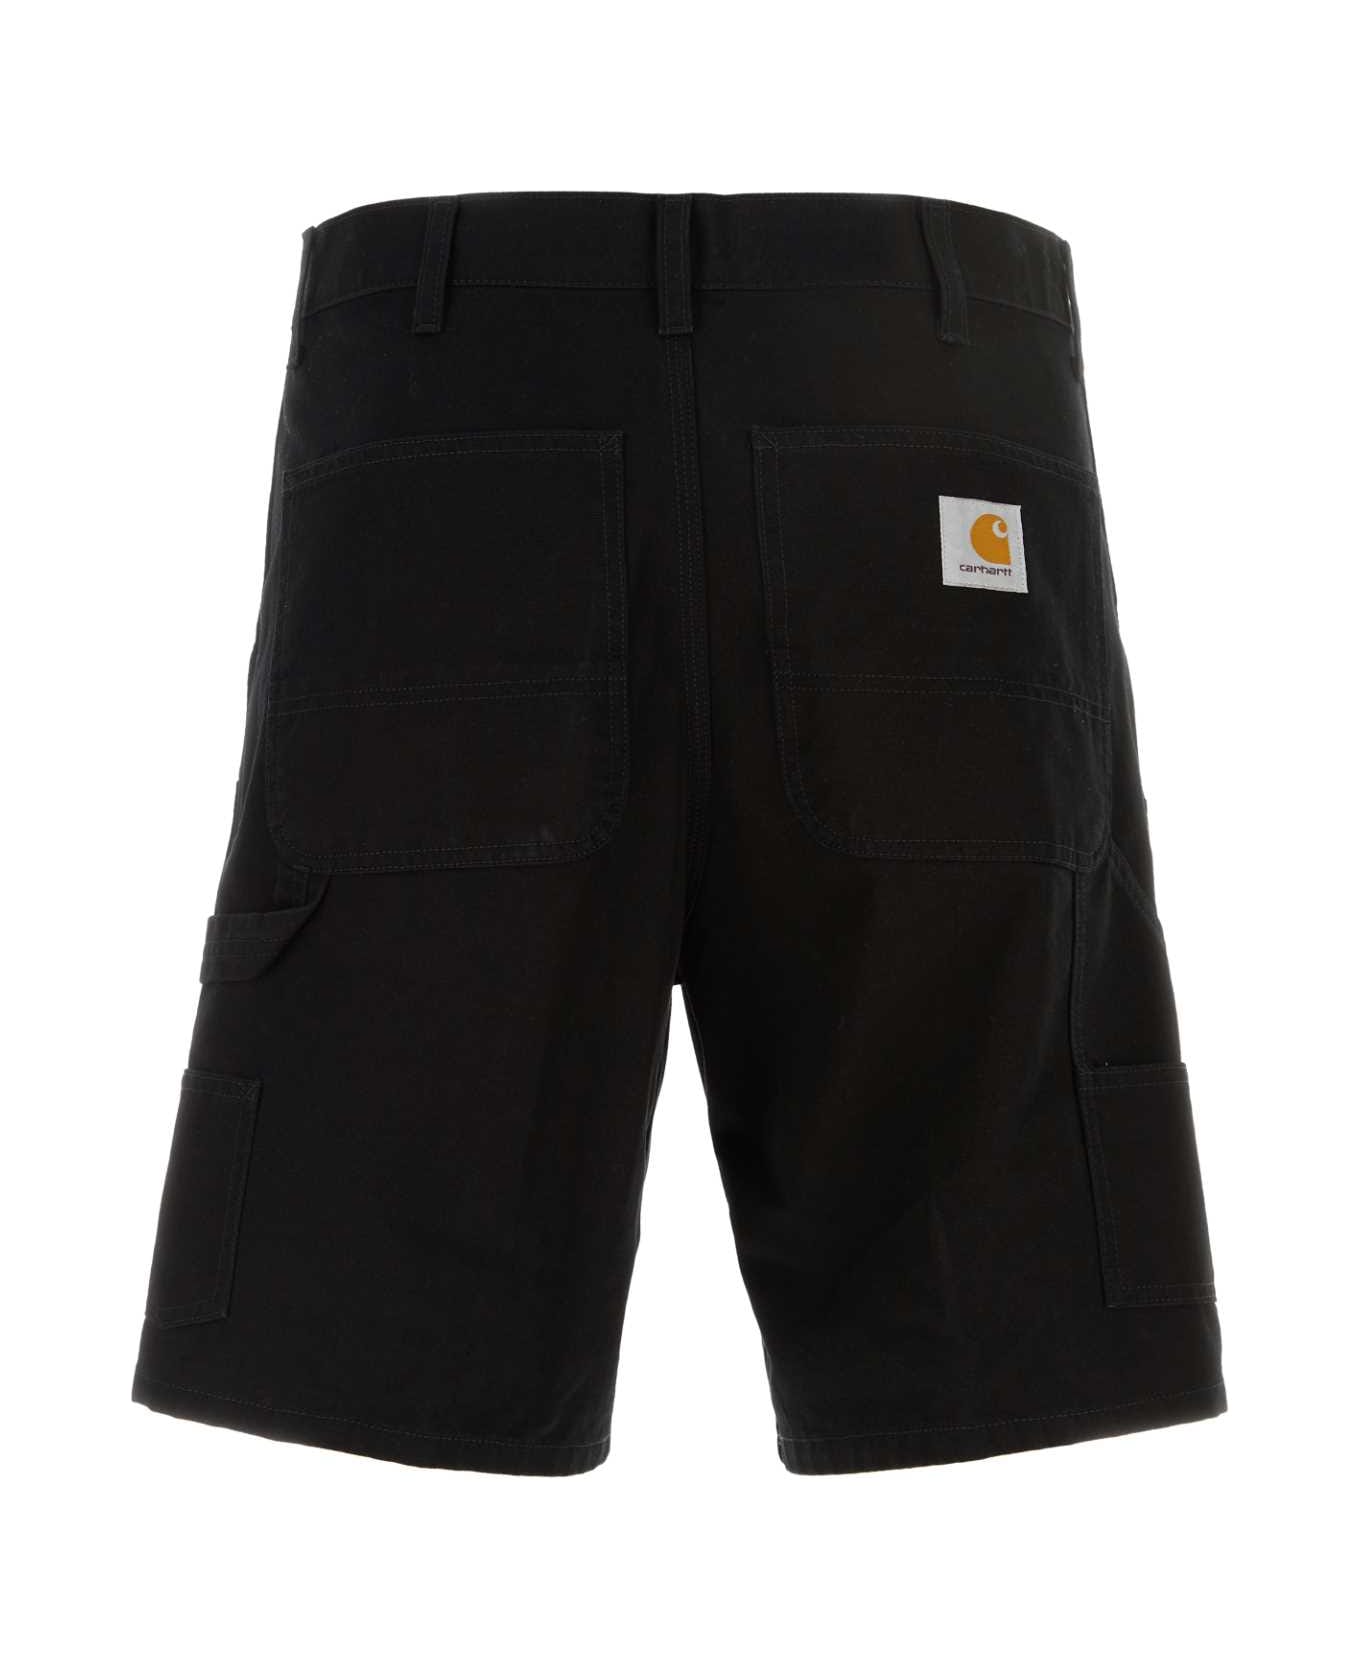 Carhartt Black Cotton Double Knee Short - DUNDEE ショートパンツ